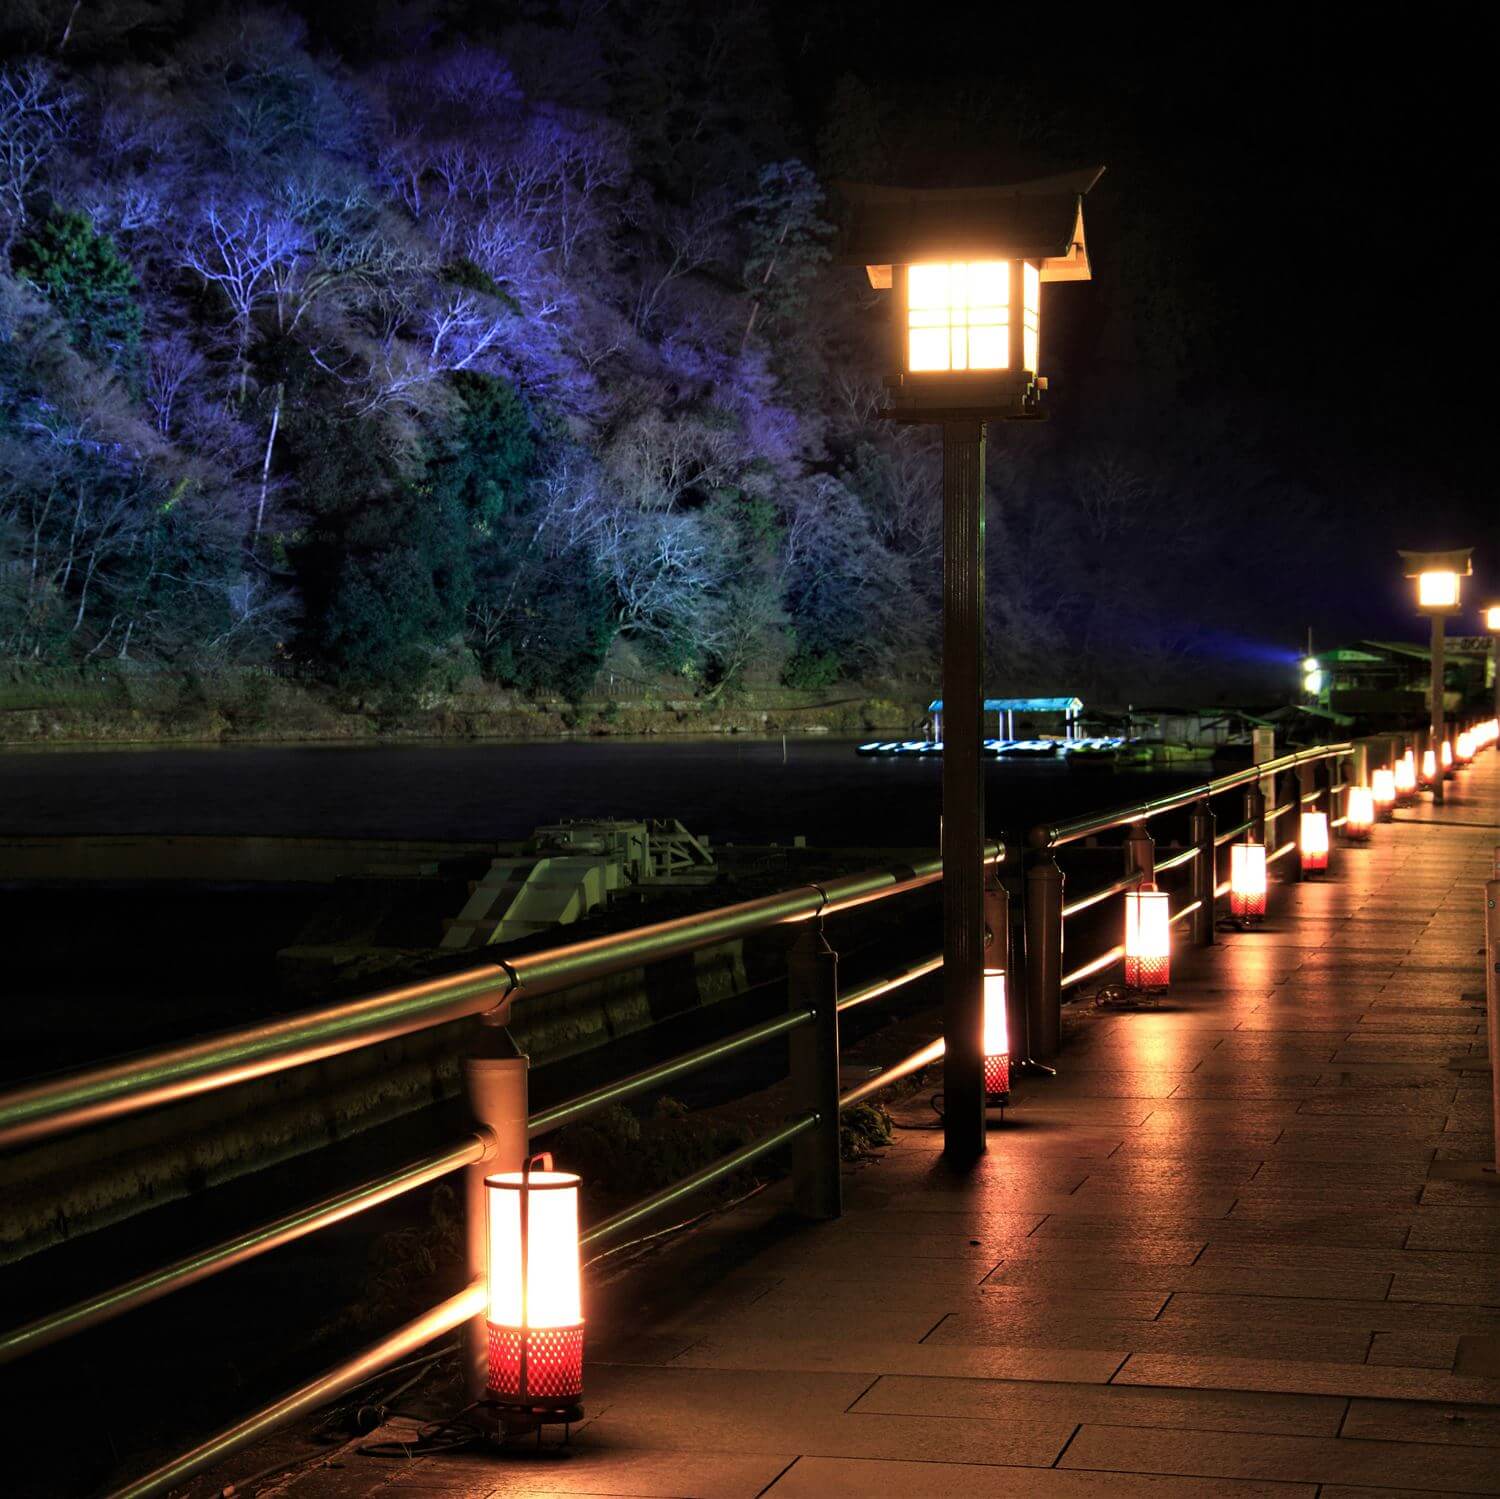 The fantastic illumination “Hanatouro” in Arashiyama, Kyoto = AdobeStock 5